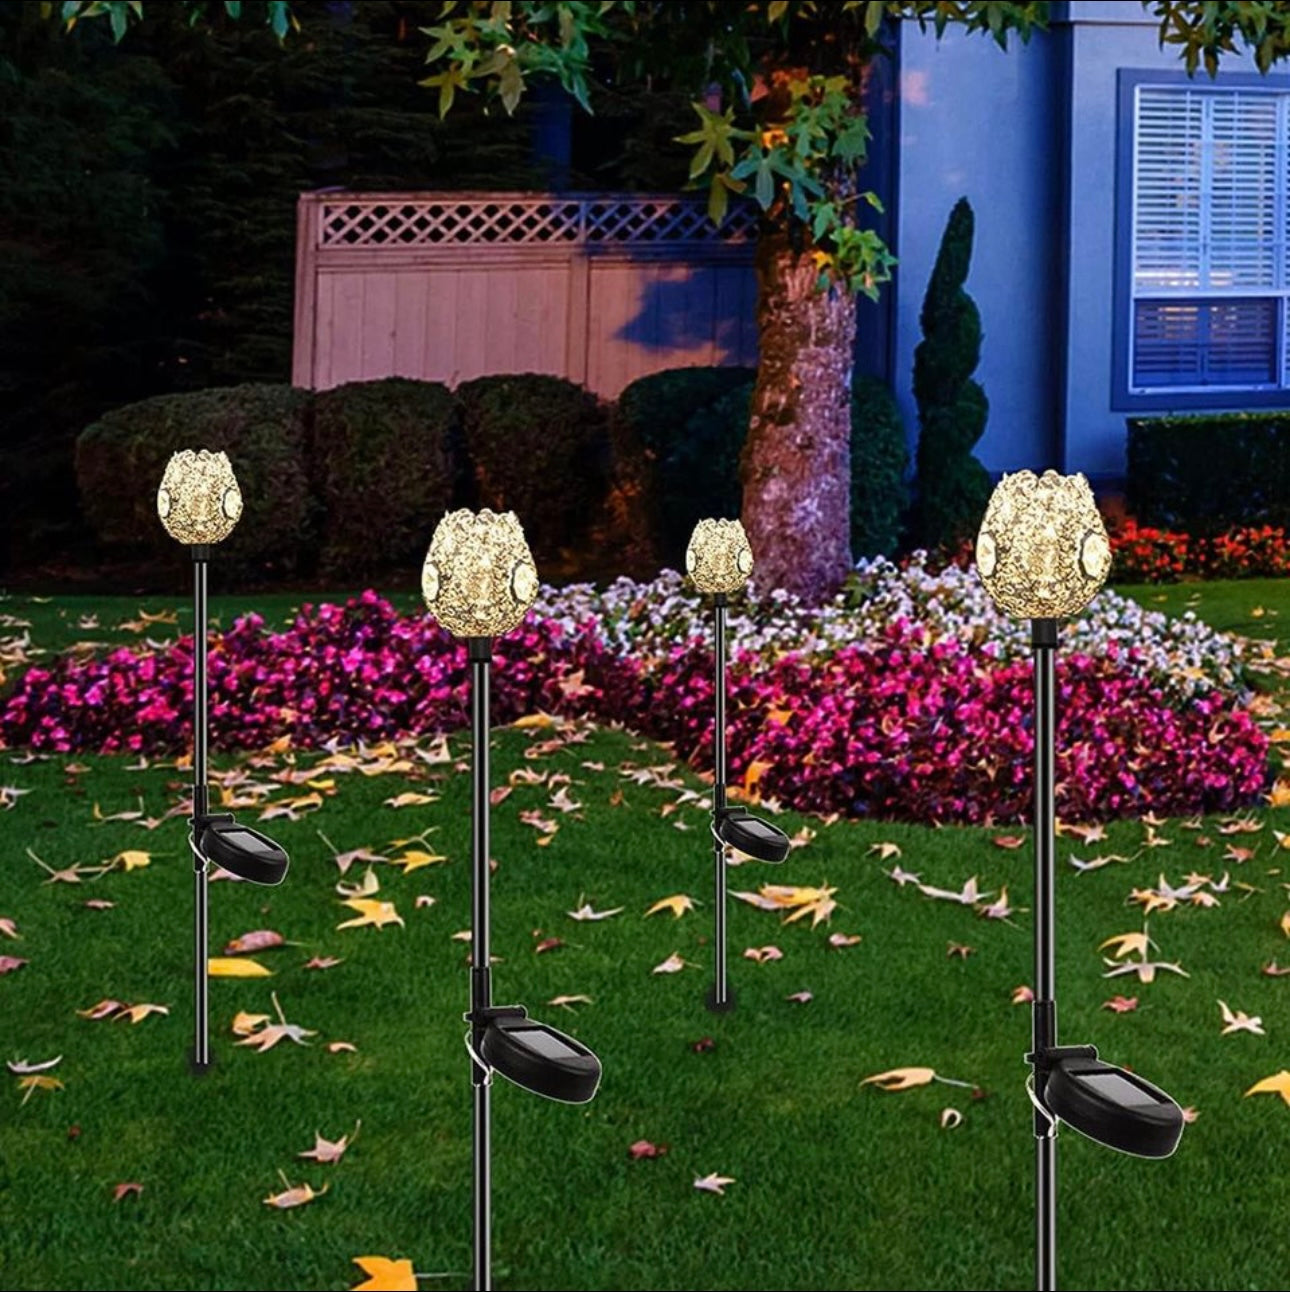 Solar Garden Light,Energy Saving Corrosion-Resistant Waterproof Lawn Lamp 2Pcs Warm Light for Garden